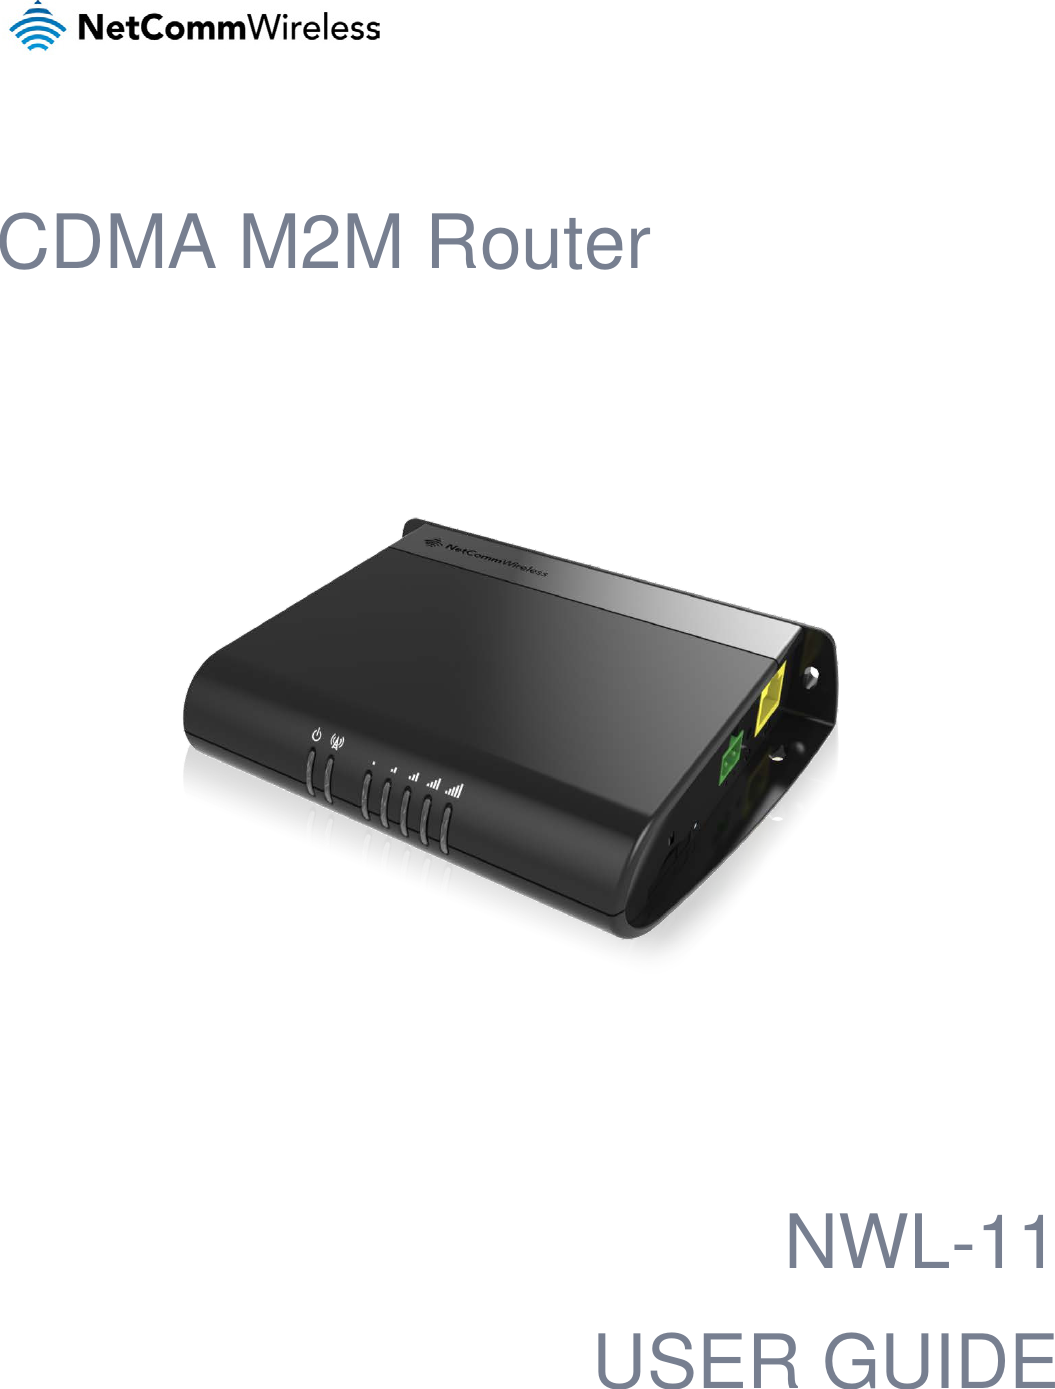     CDMA M2M Router           NWL-11 USER GUIDE   